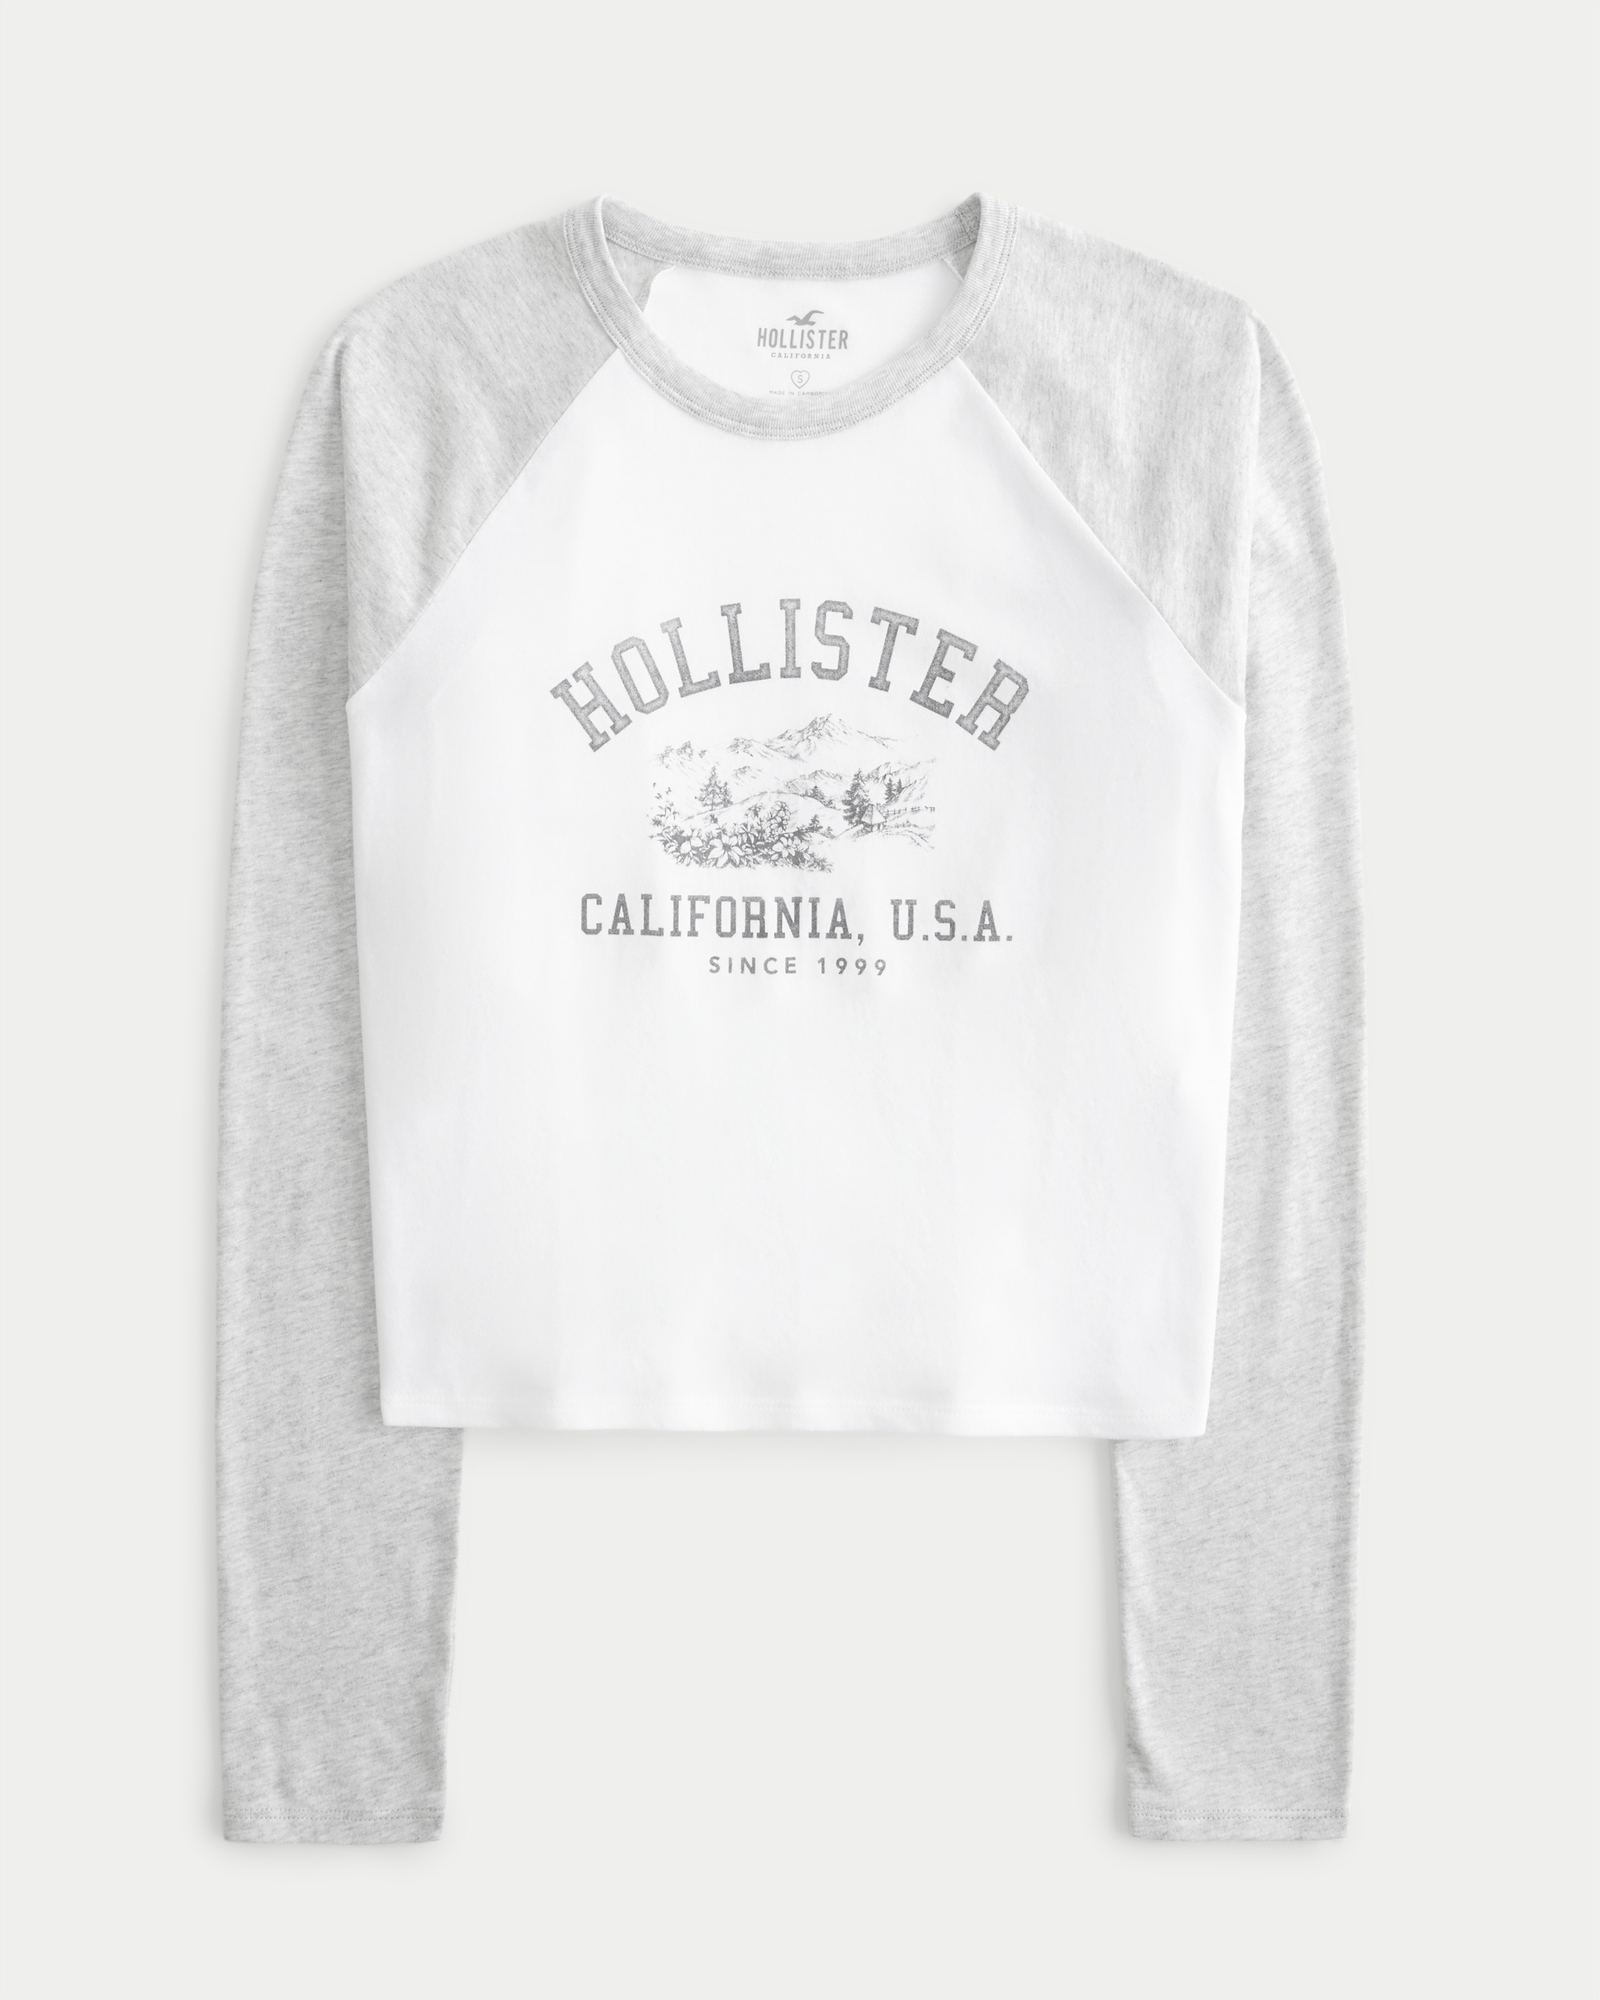 Womens Hollister brand long sleeve crop top size xsmall